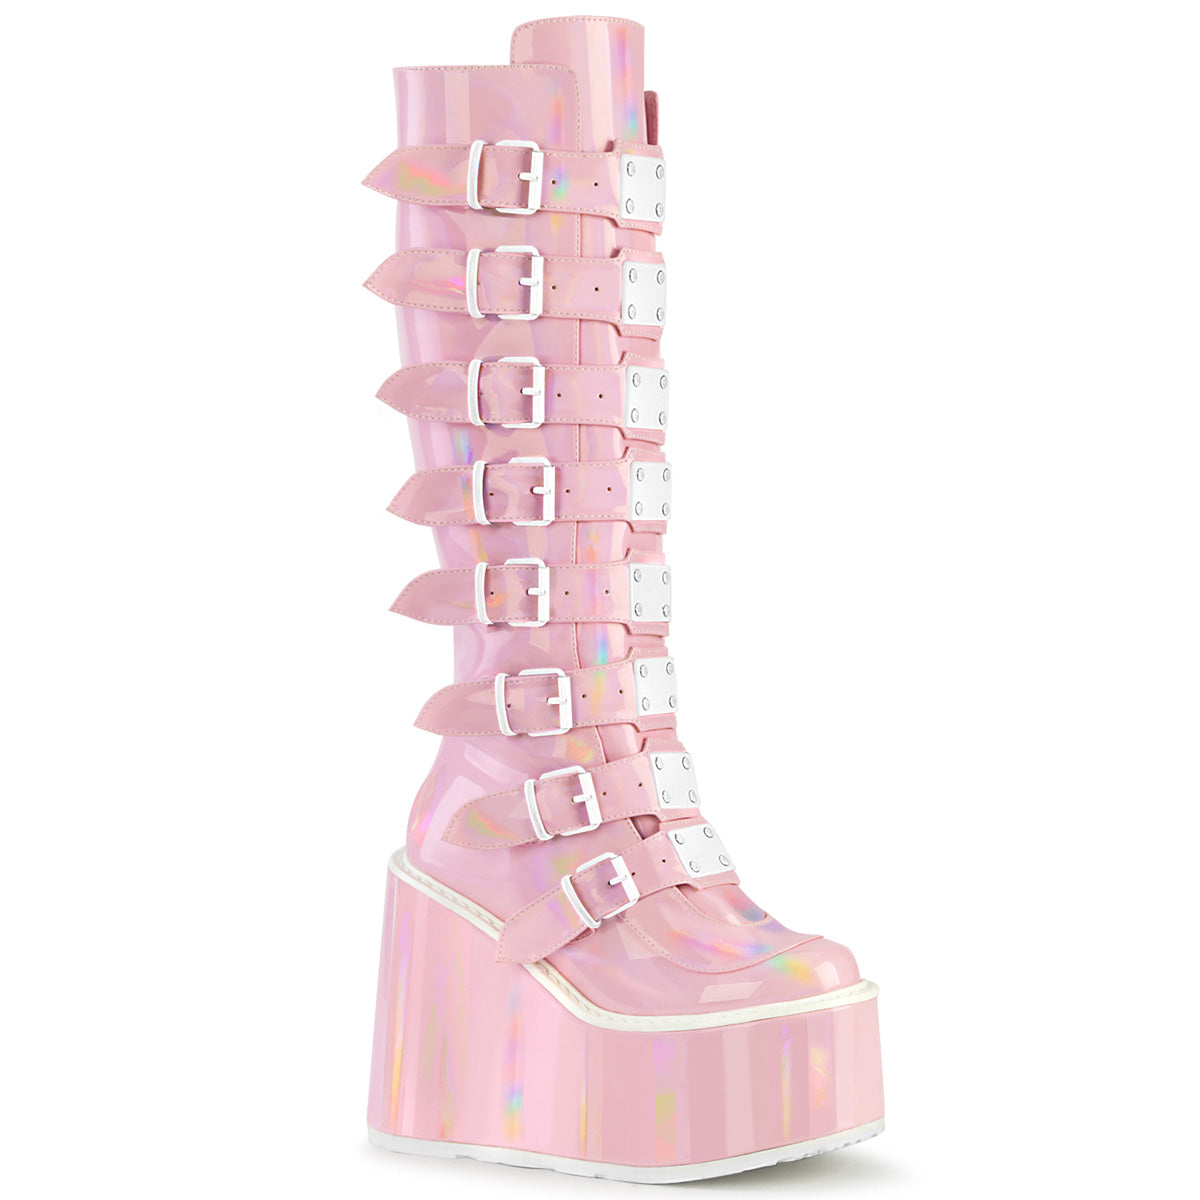 DemoniaCult  Boots SWING-815 B.Pink Hologram